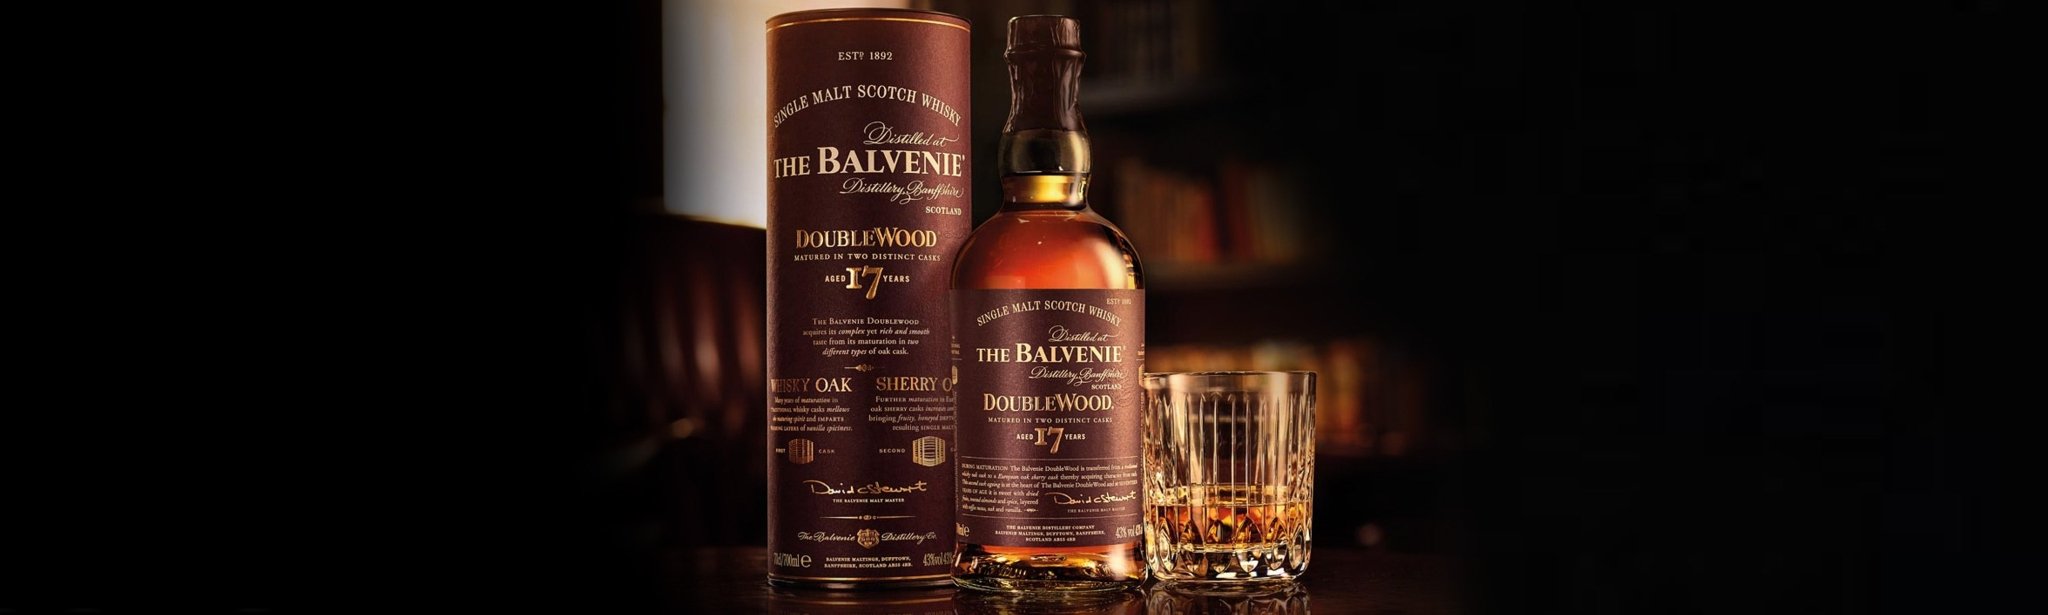 Balvenie - The Bottle Club